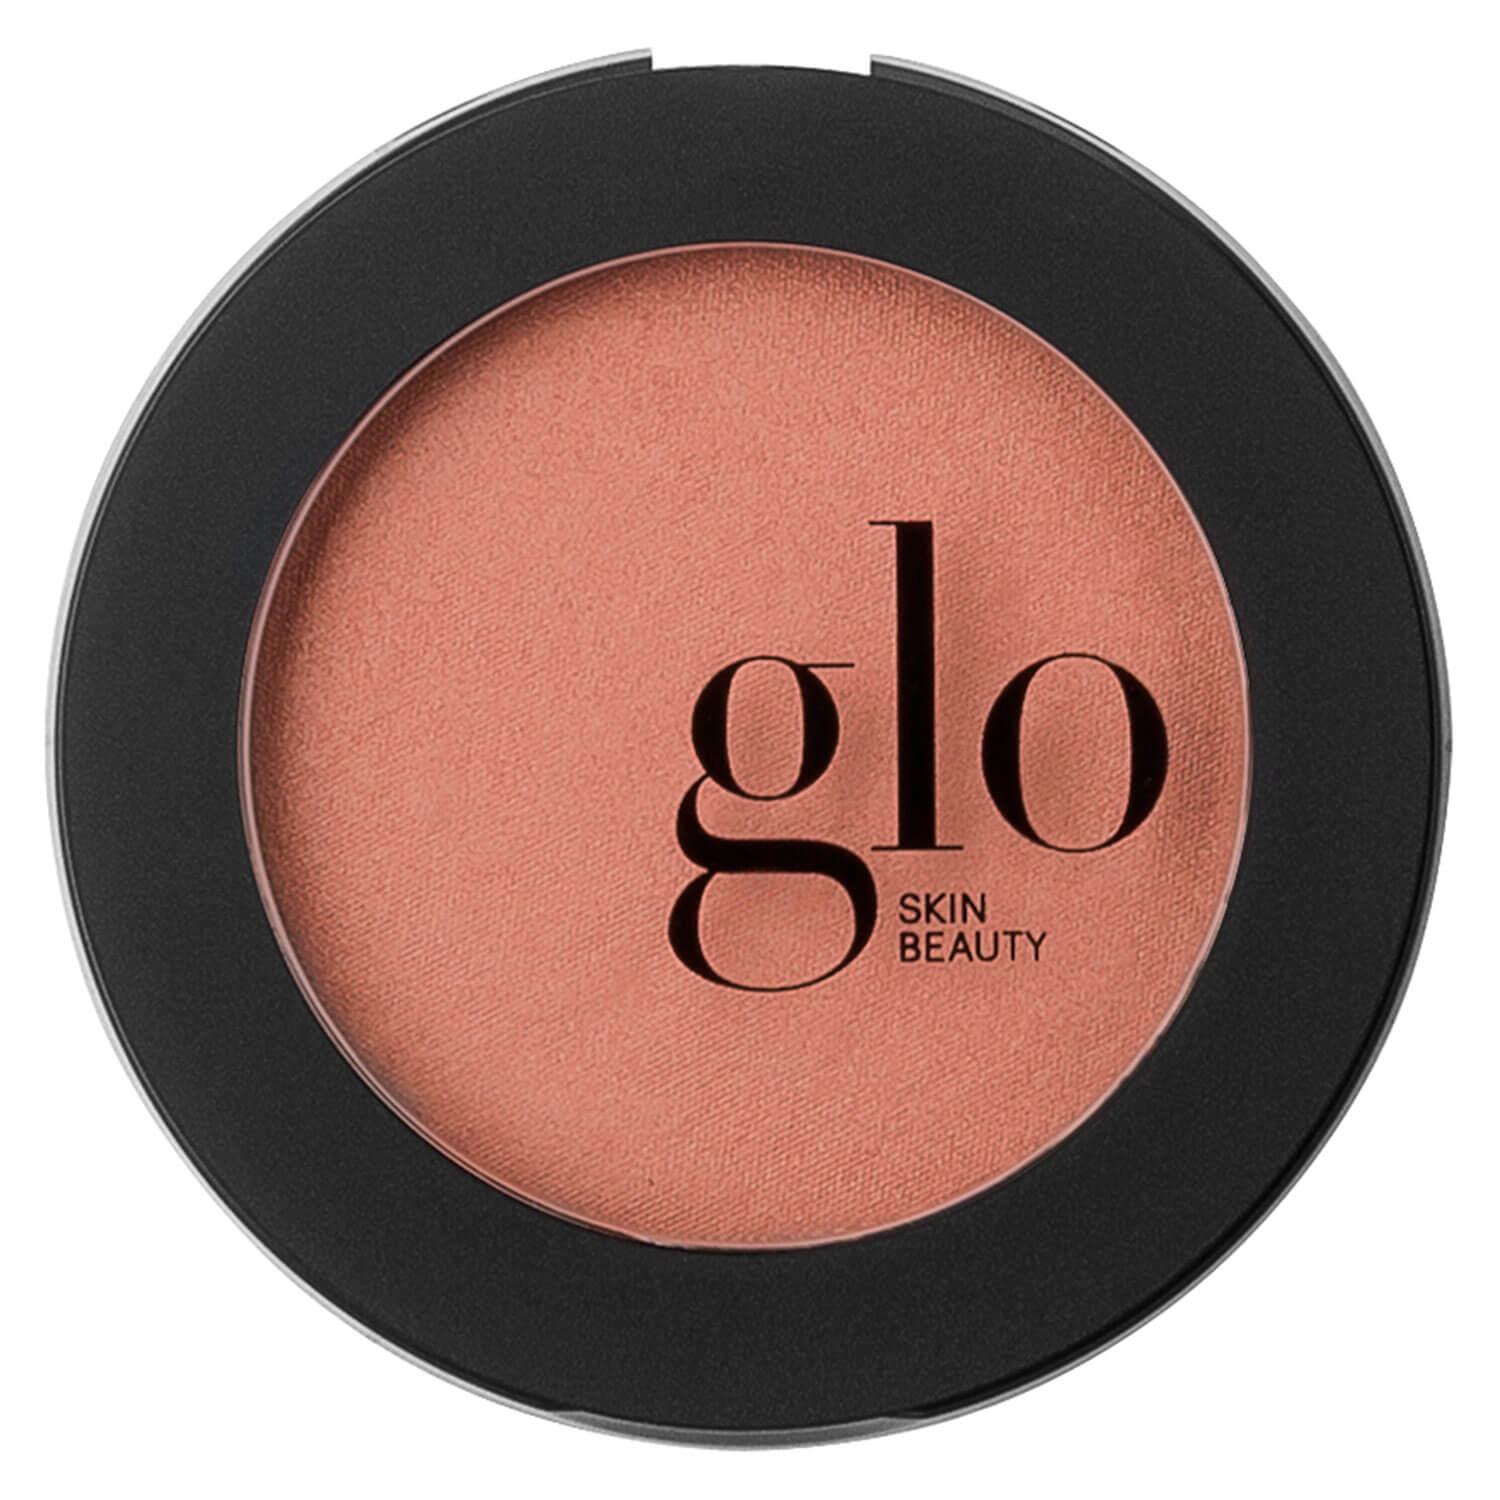 Glo Skin Beauty Blush - Blush Soleil